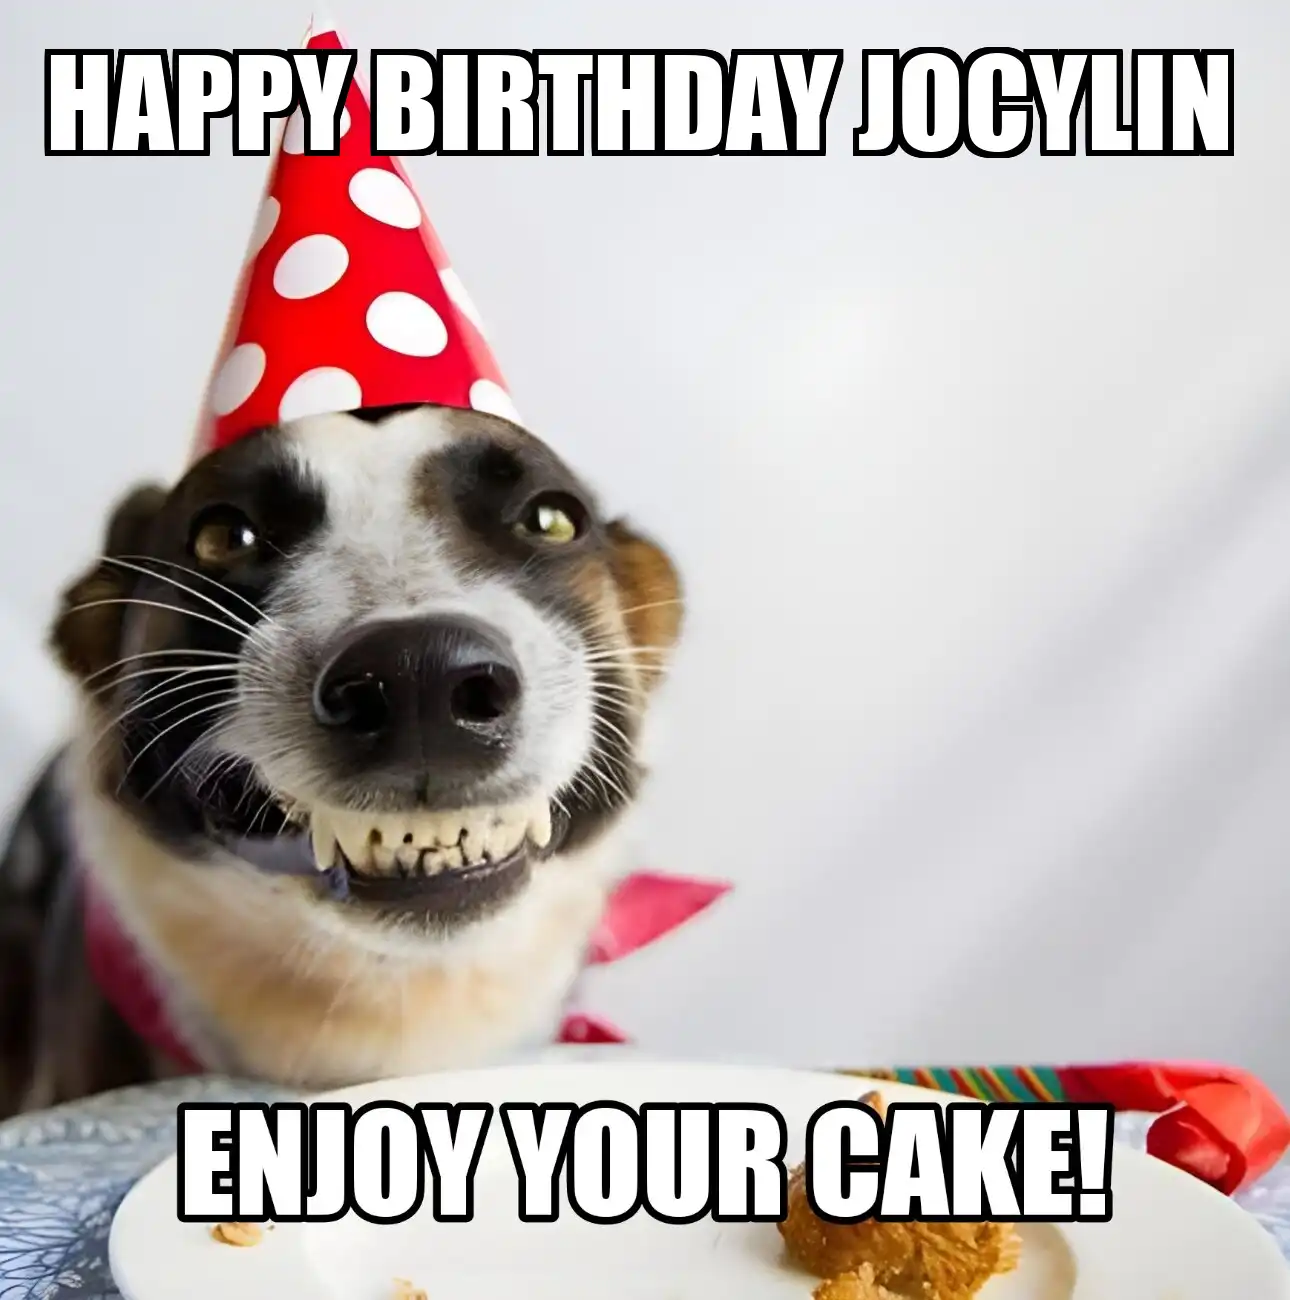 Happy Birthday Jocylin Enjoy Your Cake Dog Meme